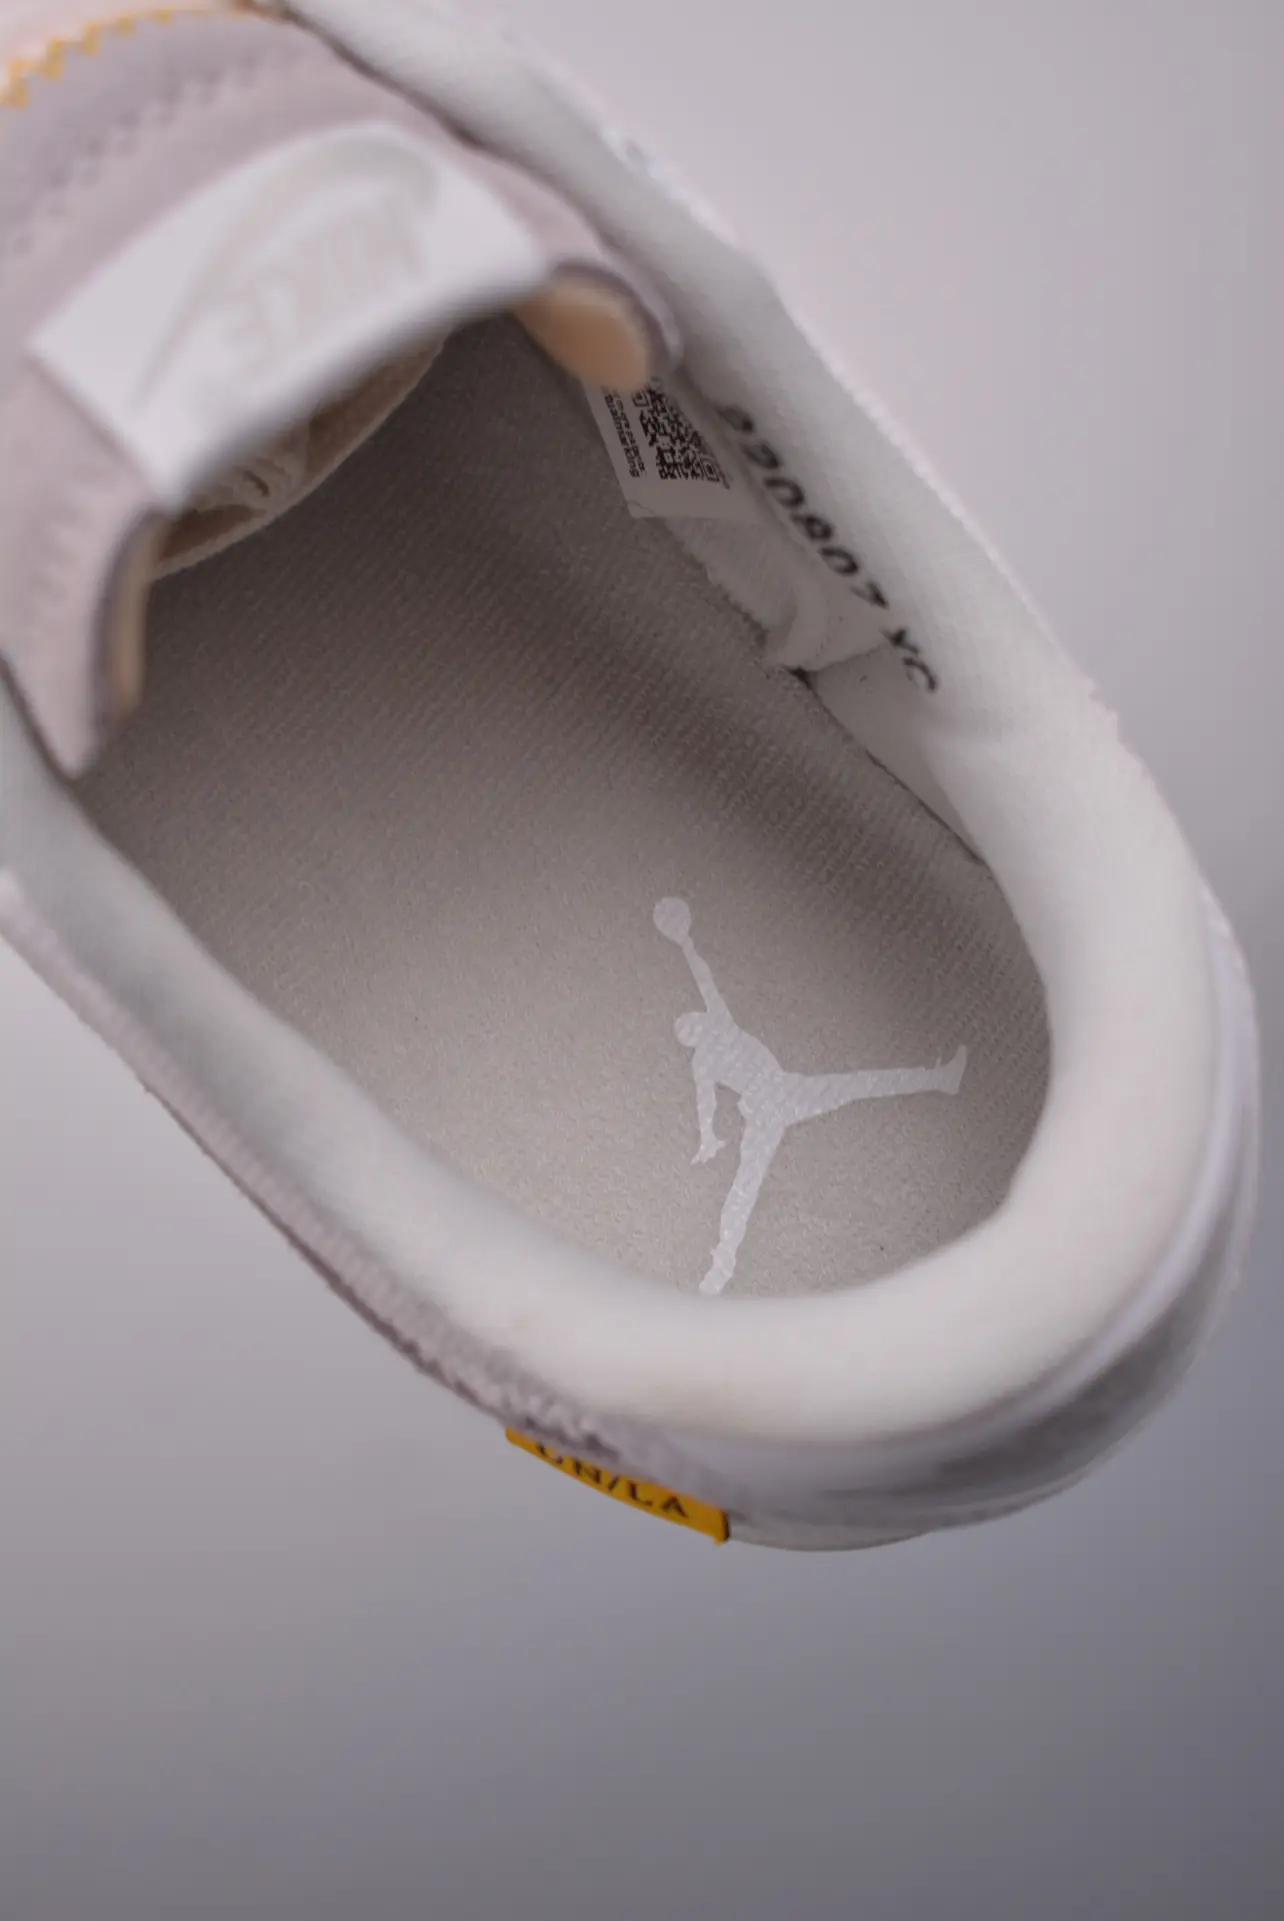 Nike Air Jordan 1 Retro Ajko Low Sp Union White Canvas Do8912-101 Review | YtaYta